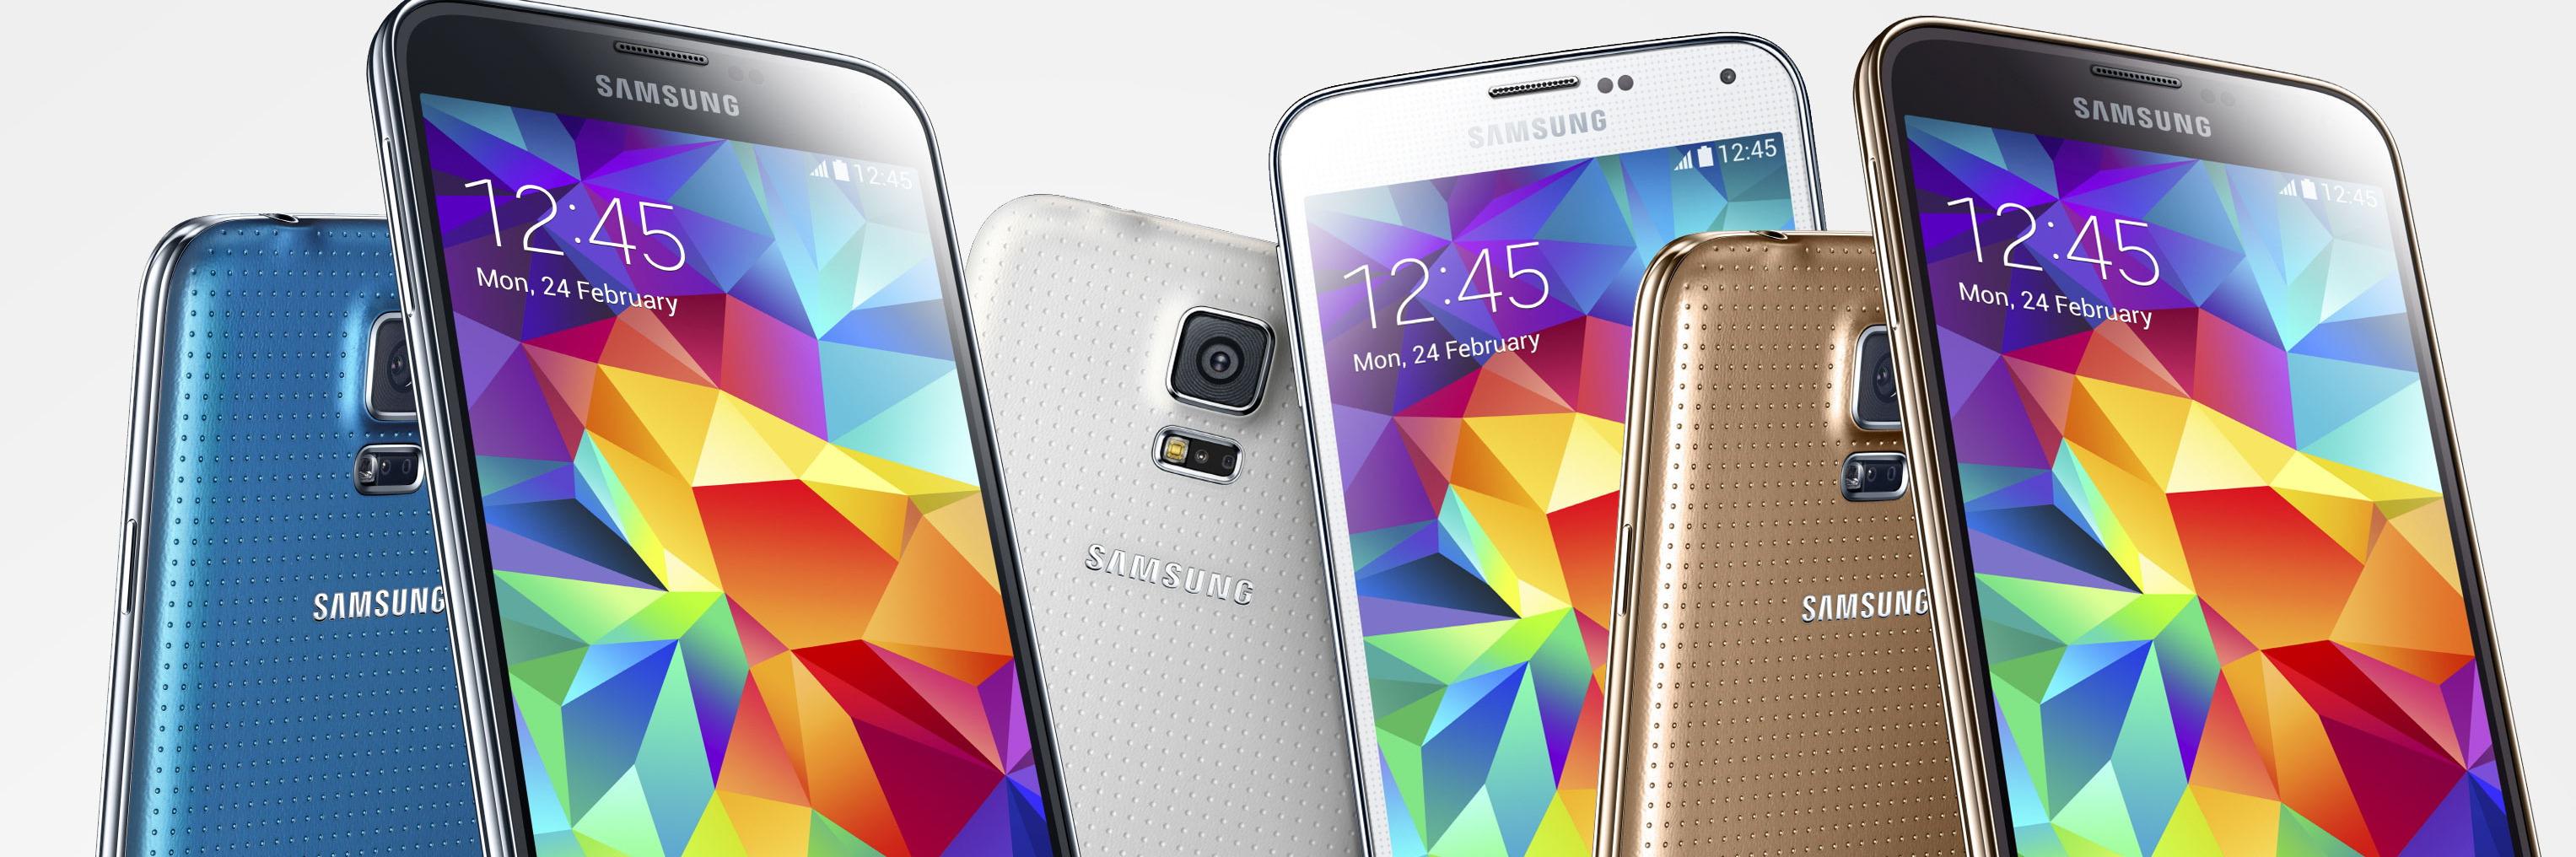 Samsung Galaxy S5.Foto: Samsung